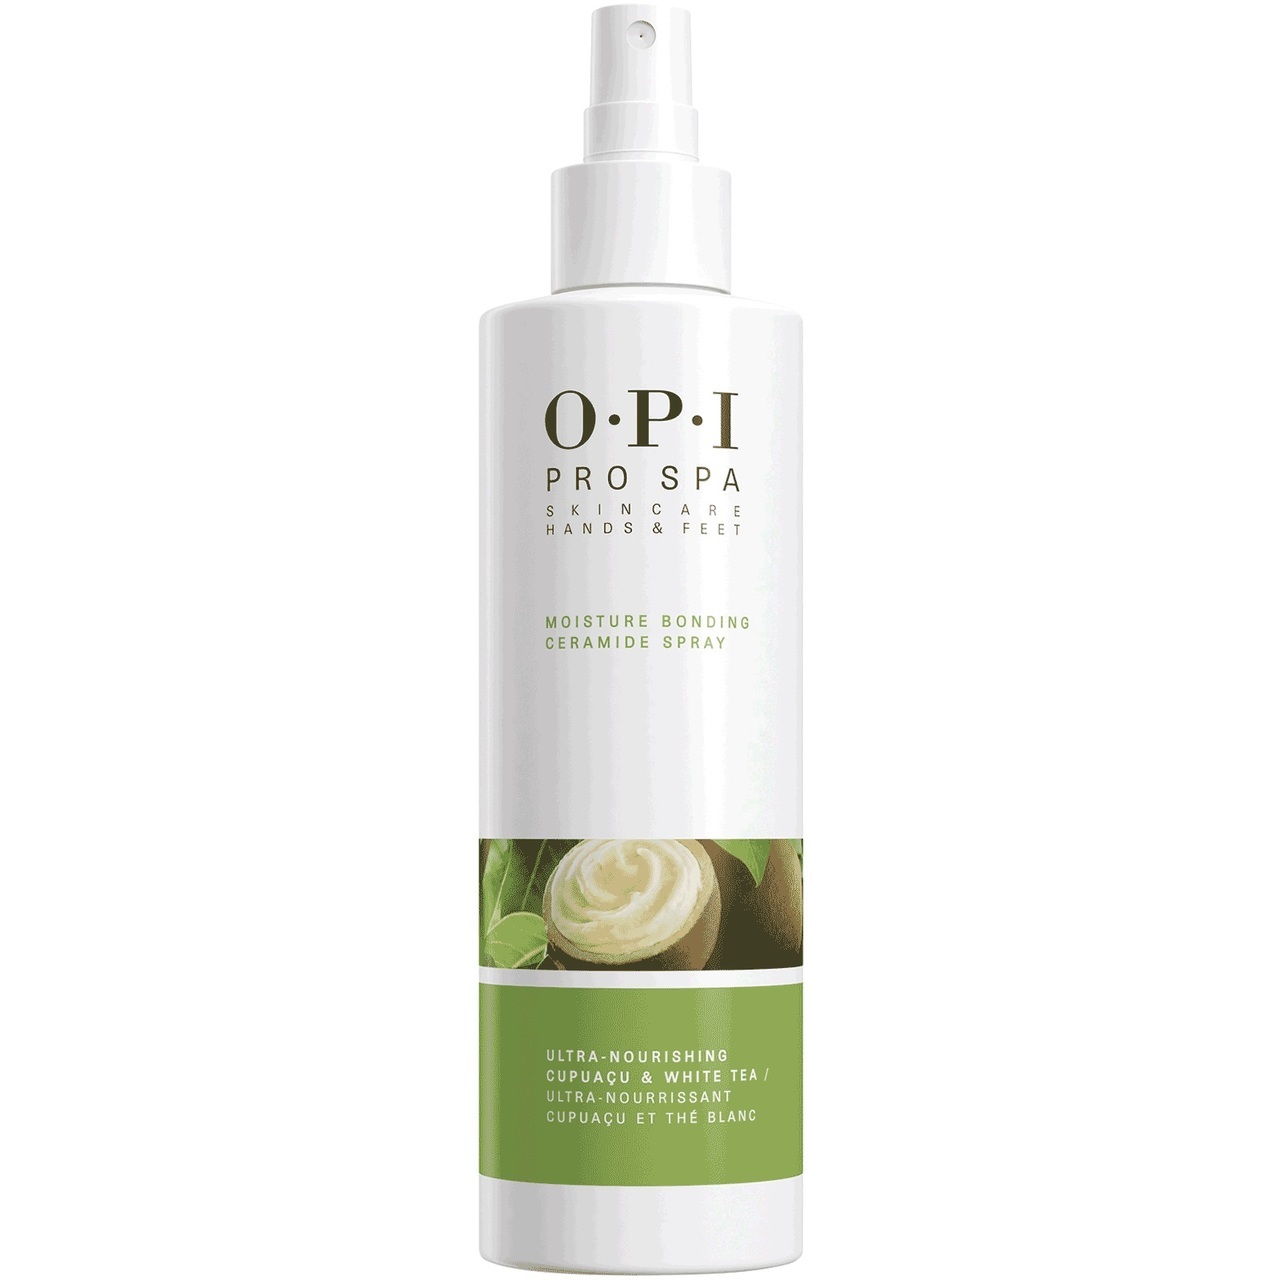 OPI Pro Spa Moisture Bonding Ceramide Spray 7.6oz